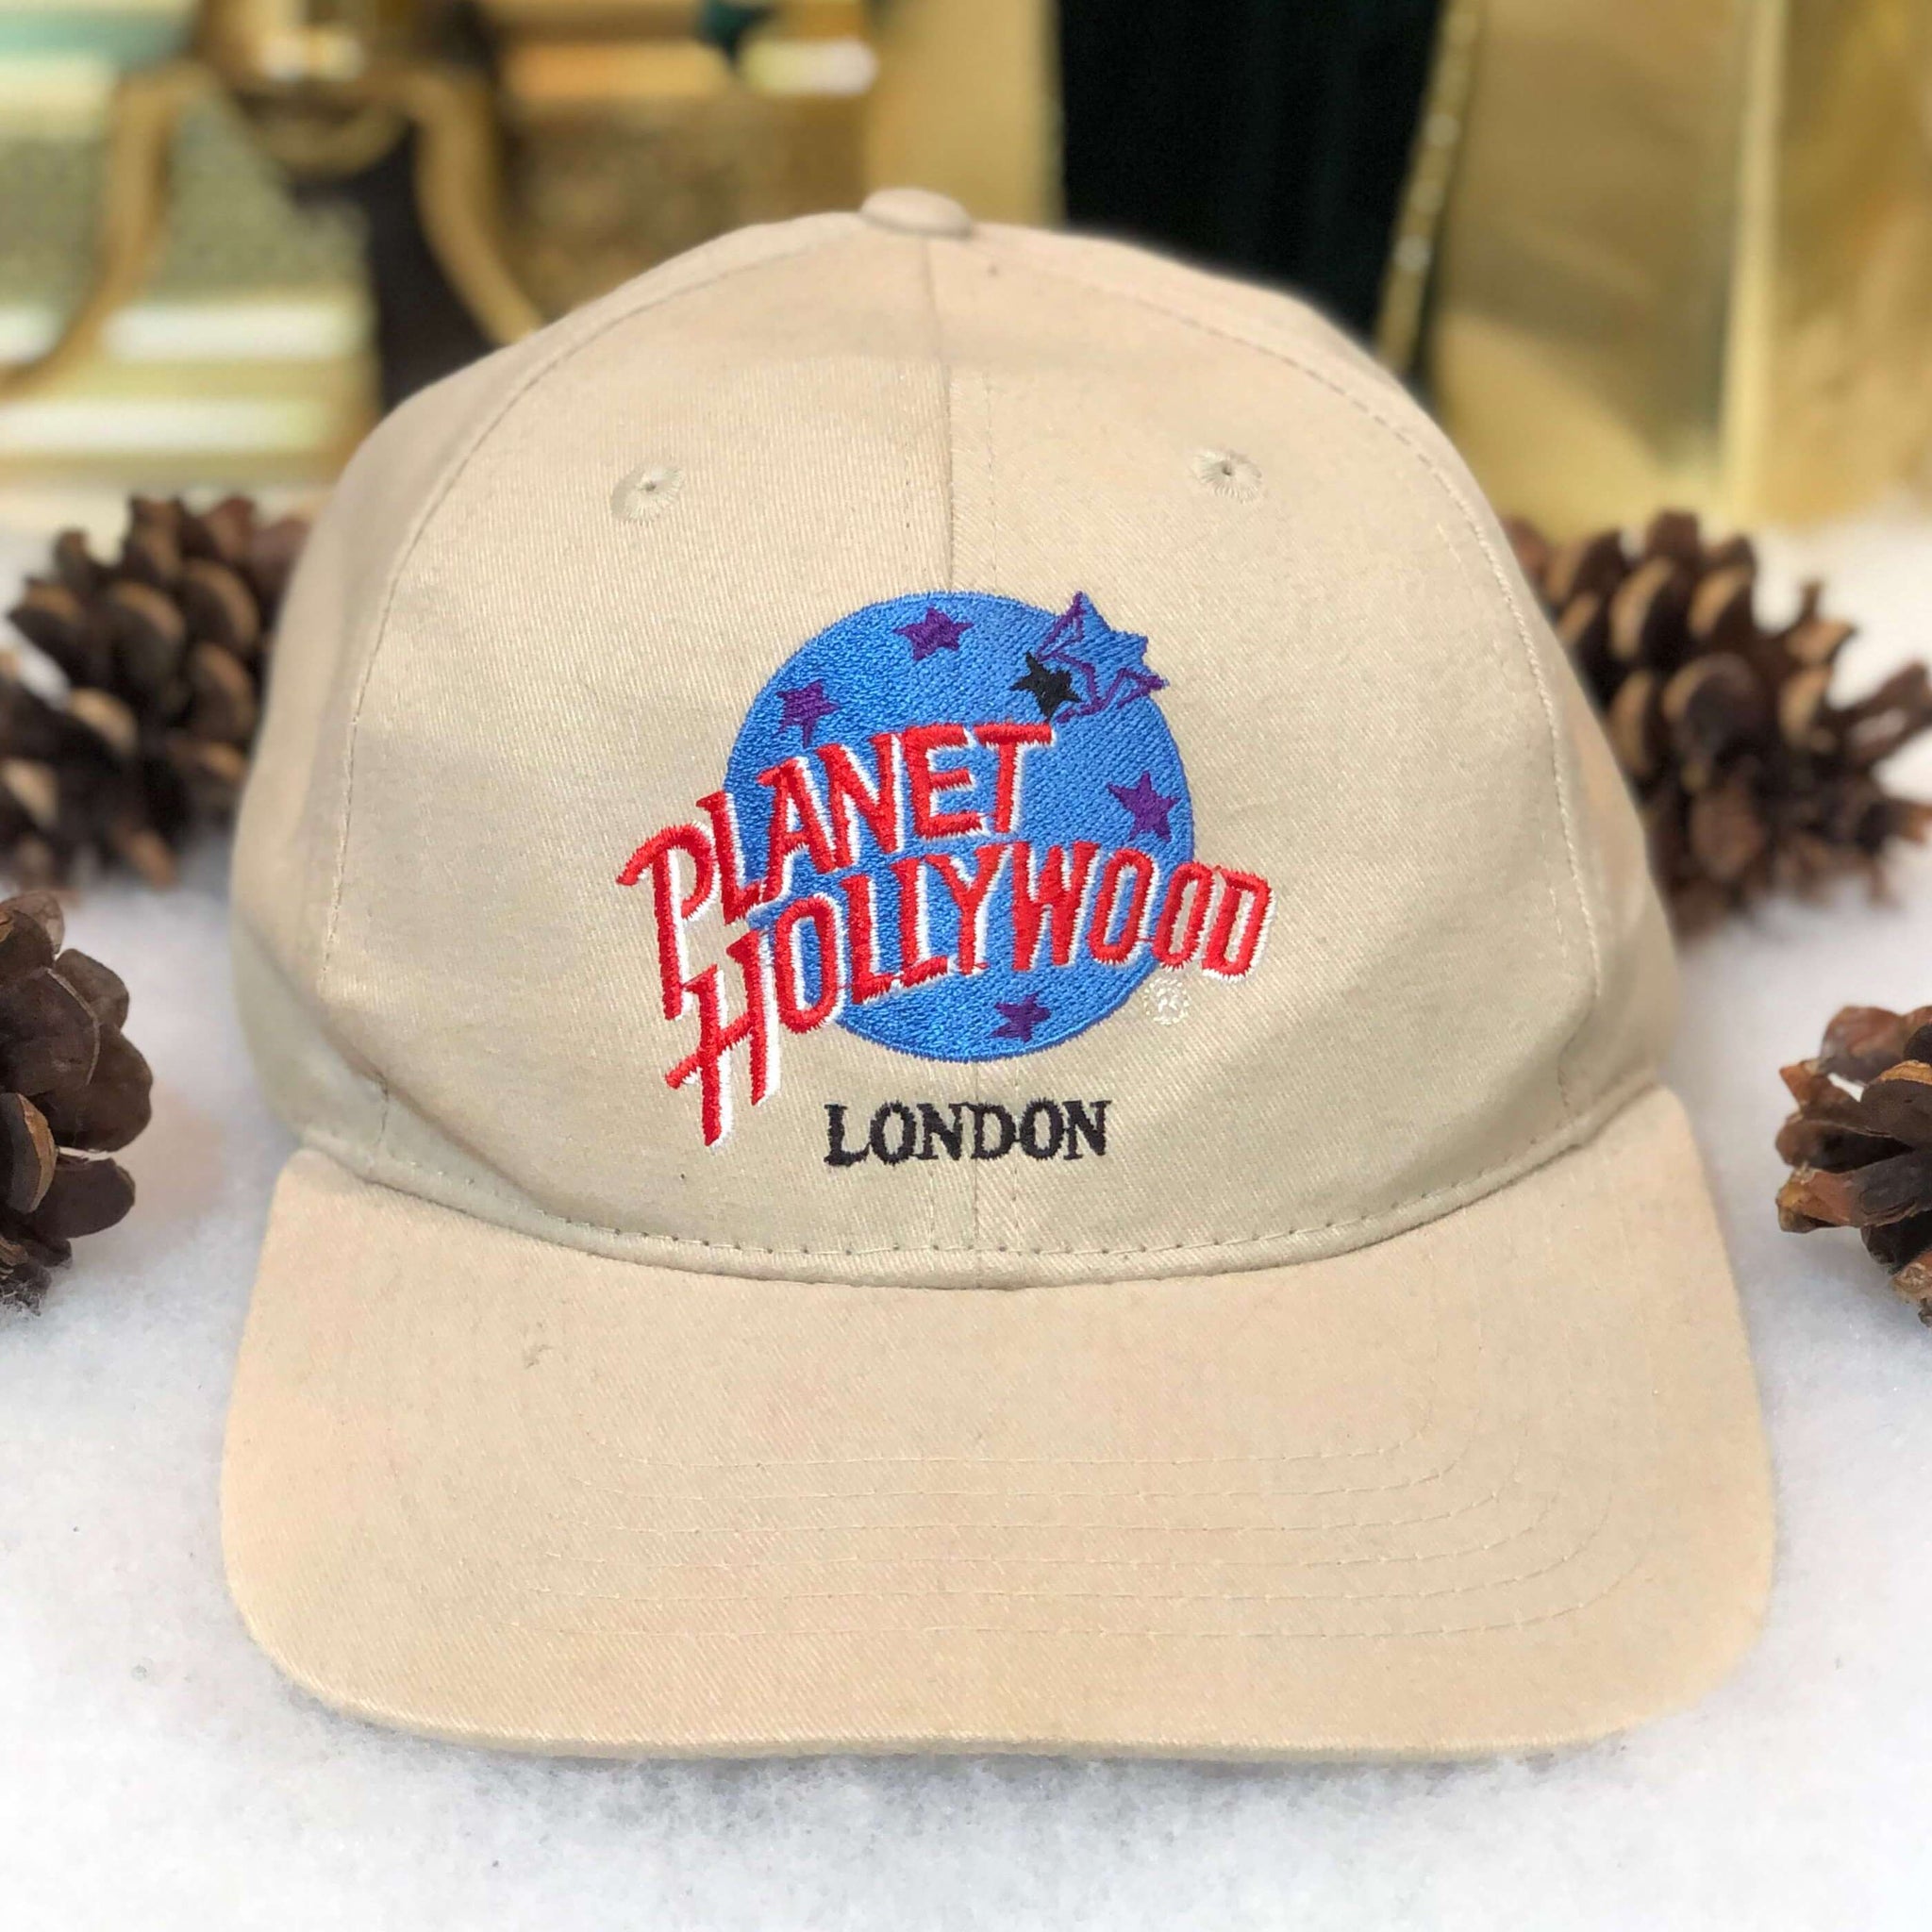 Vintage Planet Hollywood London Snapback Hat